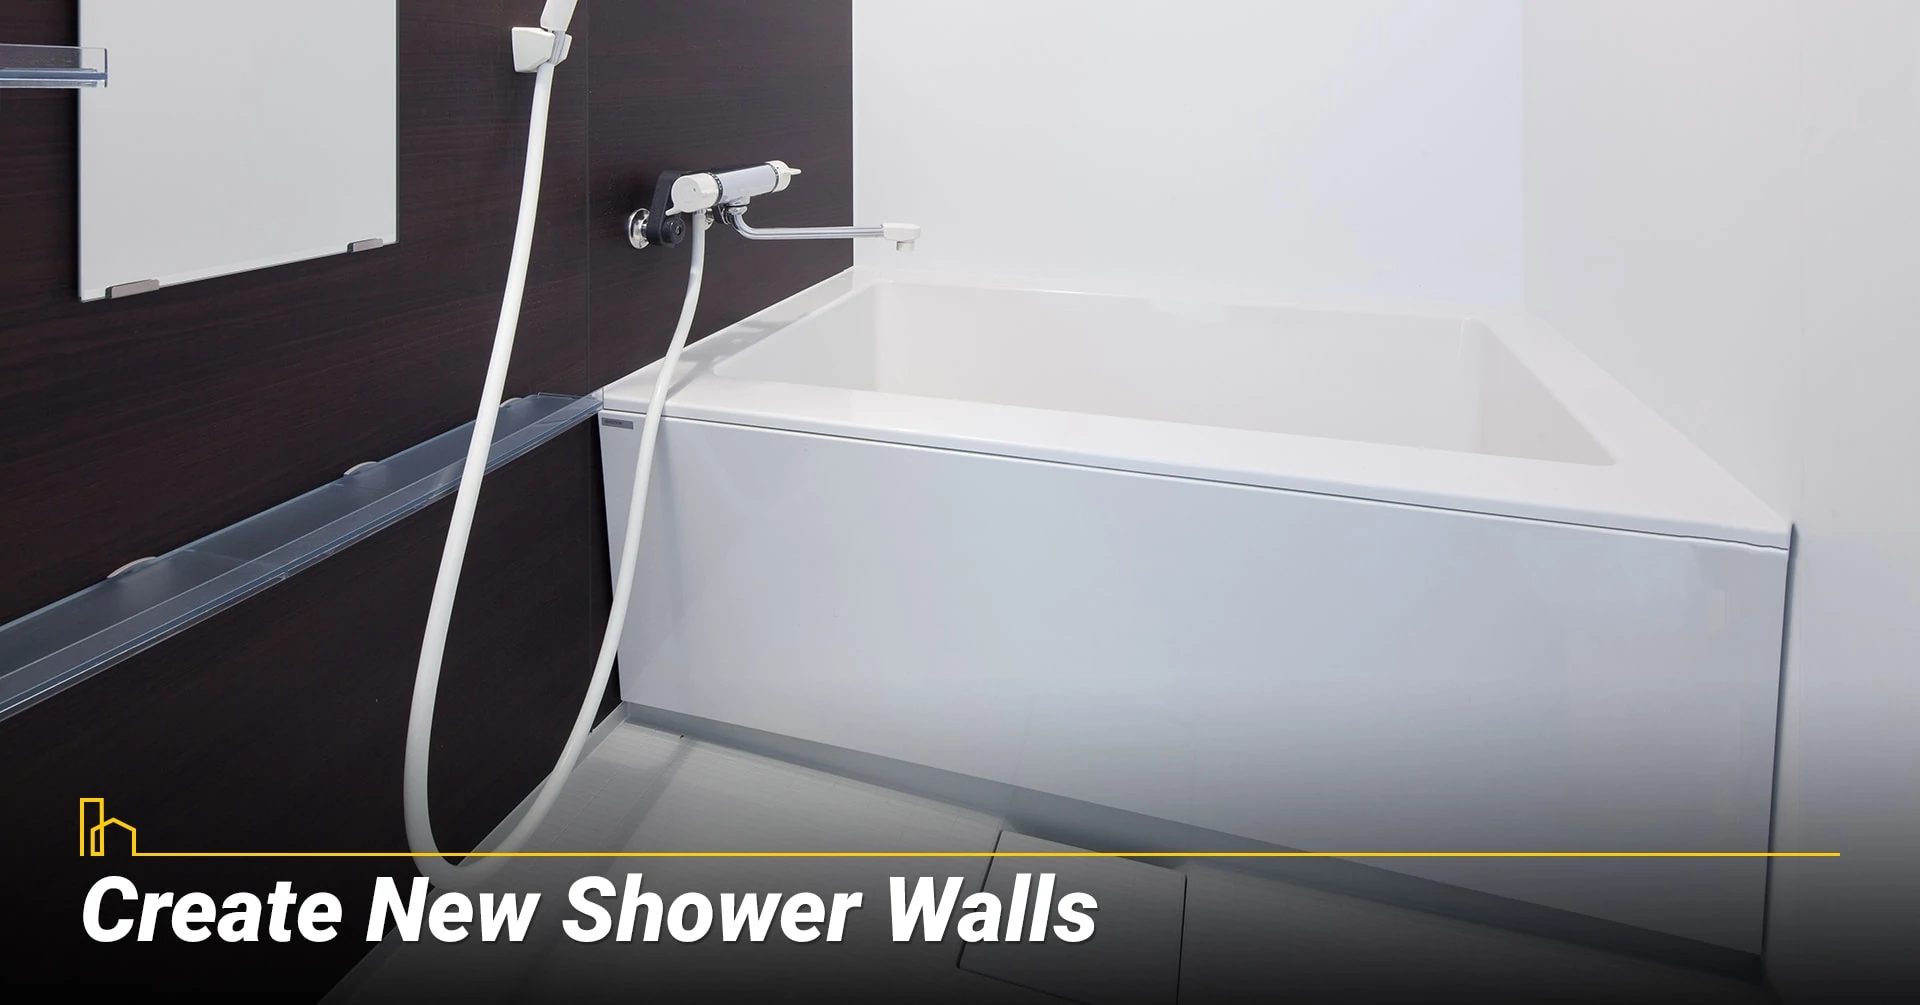 Create New Shower Walls, upgrade your bathroom